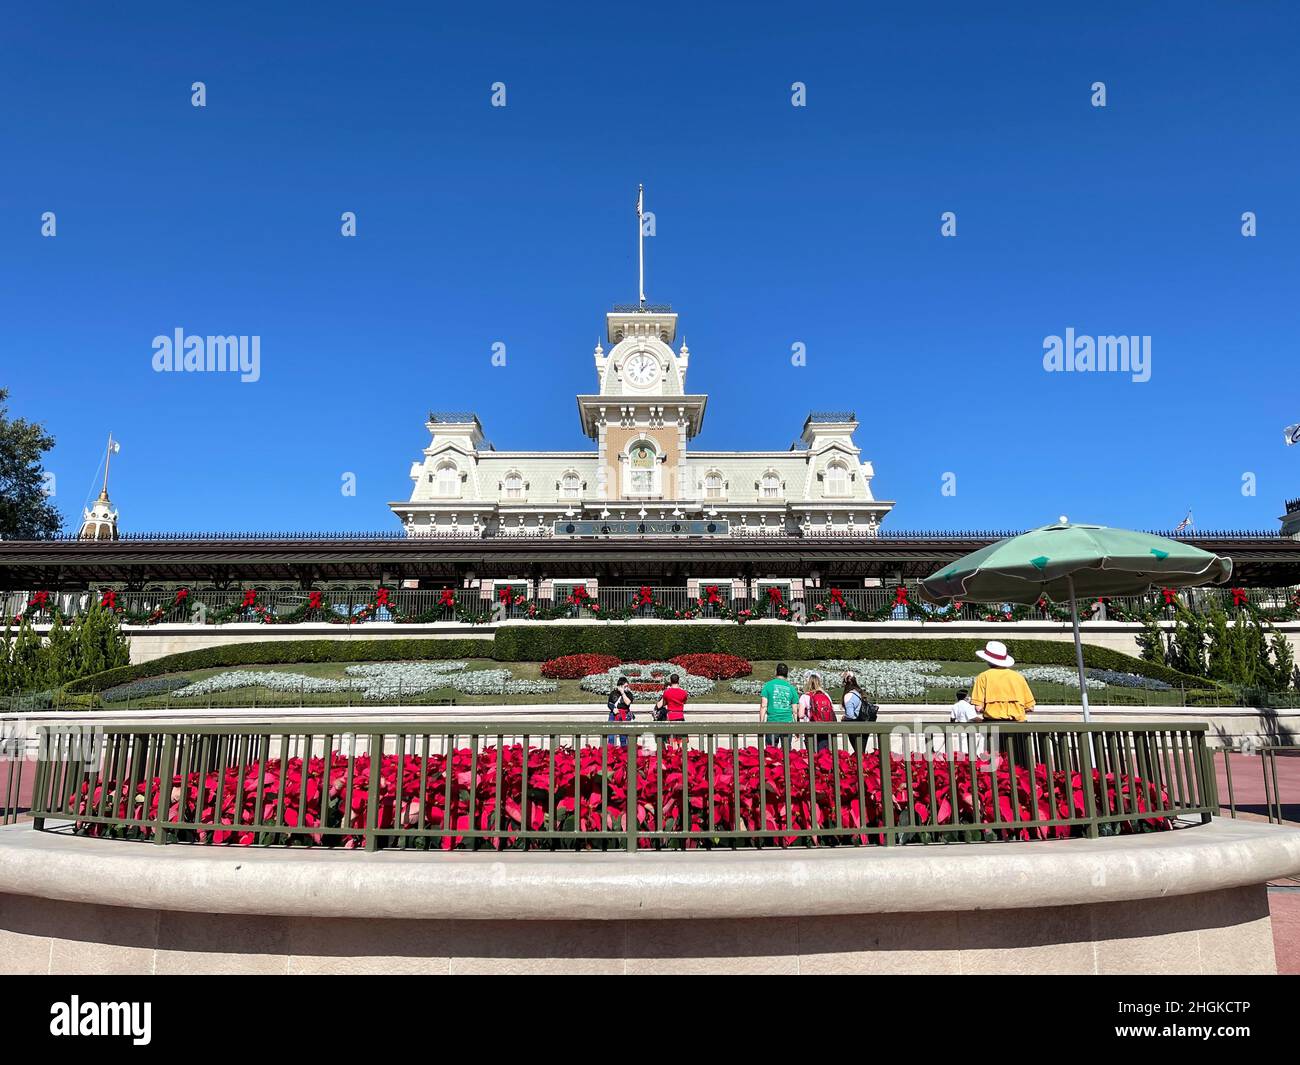 Orlando, FL USA - July 5, 2021: The train station at Walt Disney World Magic Kingdom in Orlando, Florida. Stock Photo